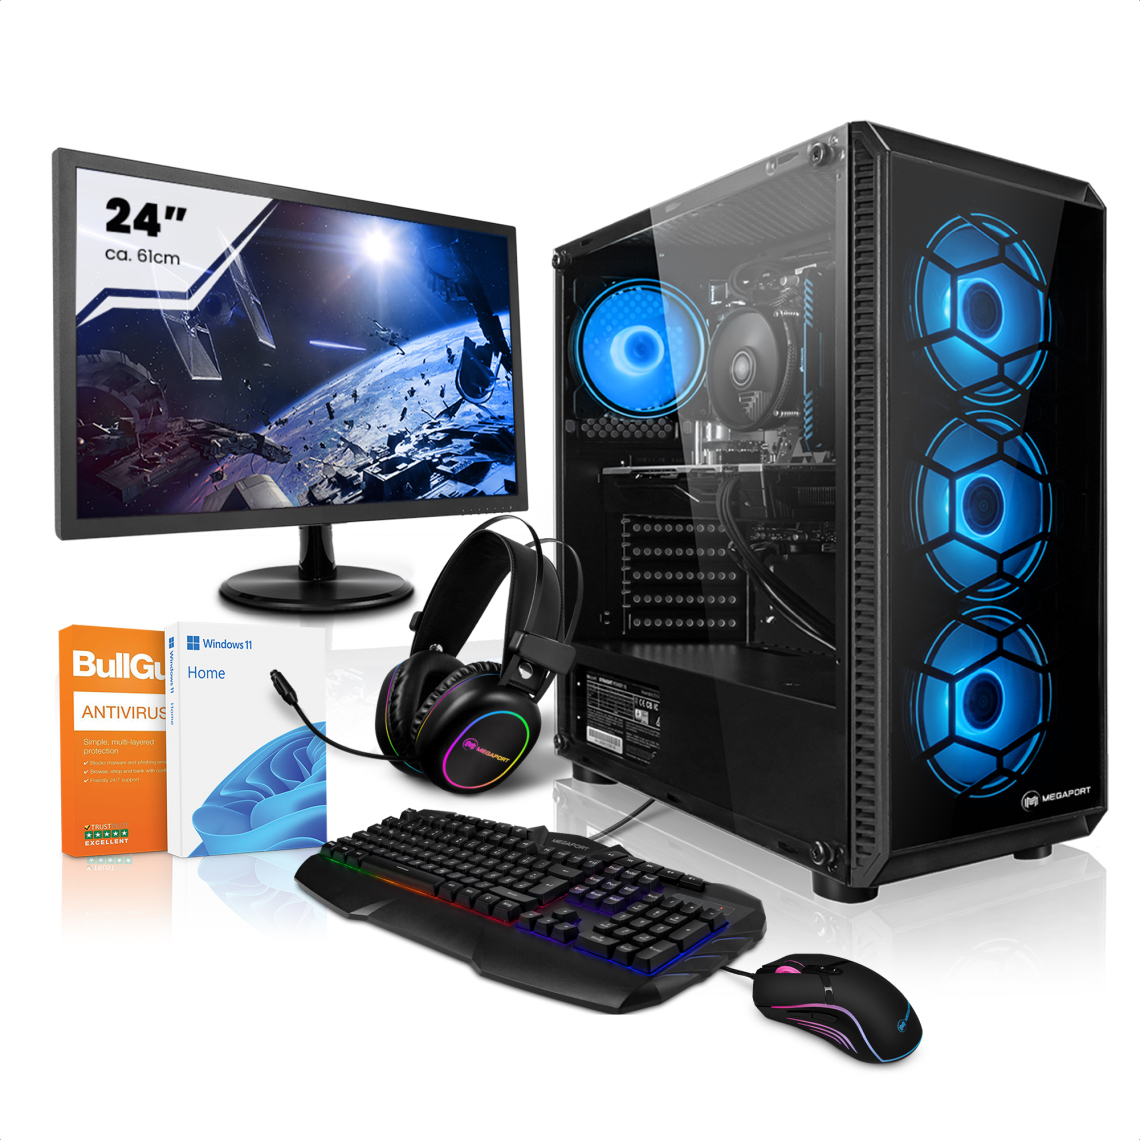 Megaport - Gamer Méga Pack PC AMD Ryzen 3 4100 • GeForce GTX1650 • Windows 11 • 8Go 3000MHz • 24" HD LED Set • 250Go M.2 SSD • 1802-FR - PC Fixe Gamer